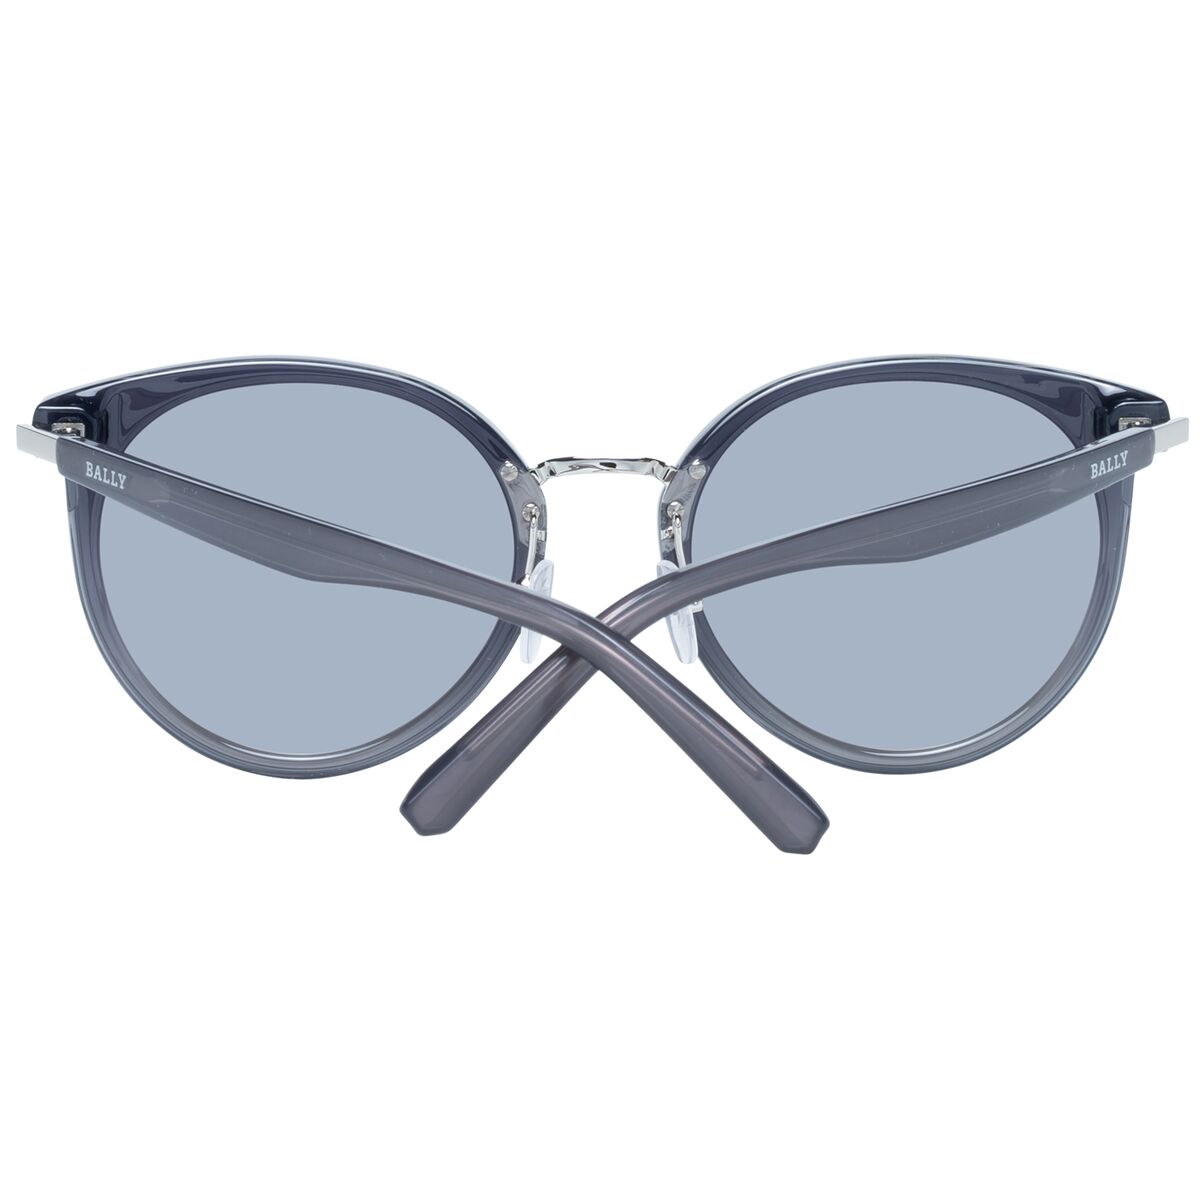 Kaufe Damensonnenbrille Bally BY0043-K 6520C bei AWK Flagship um € 114.00